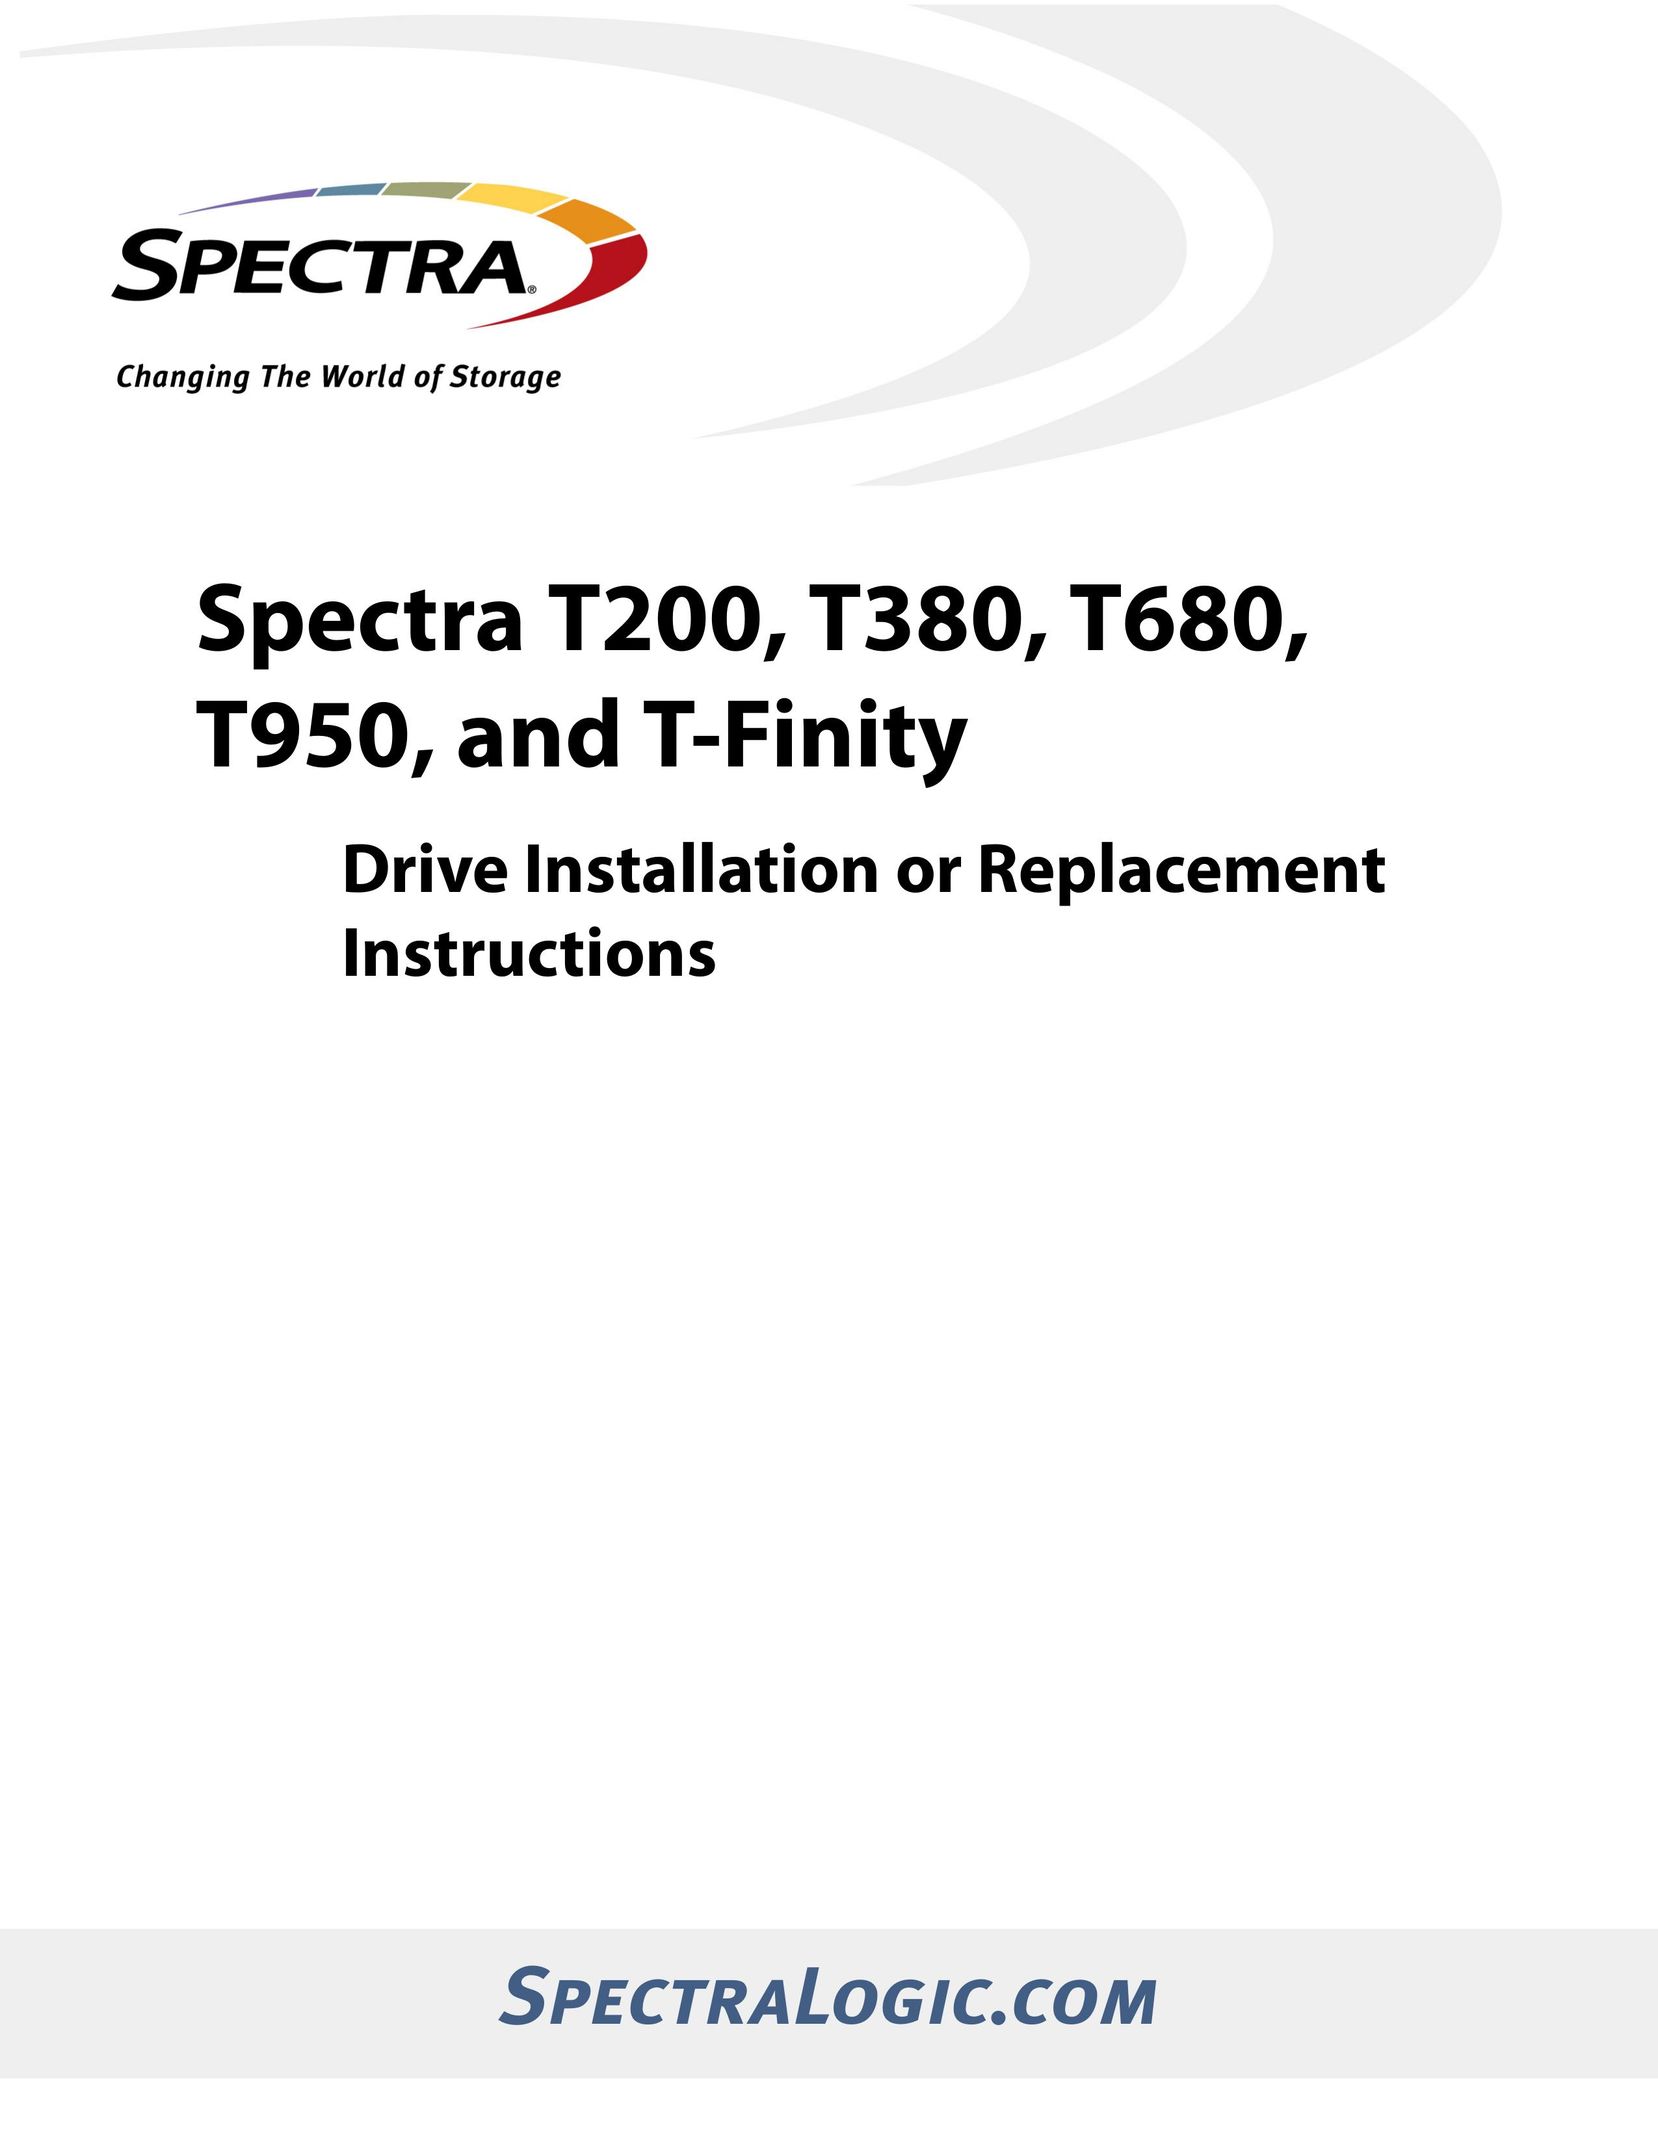 Spectra Logic T680 Computer Drive User Manual